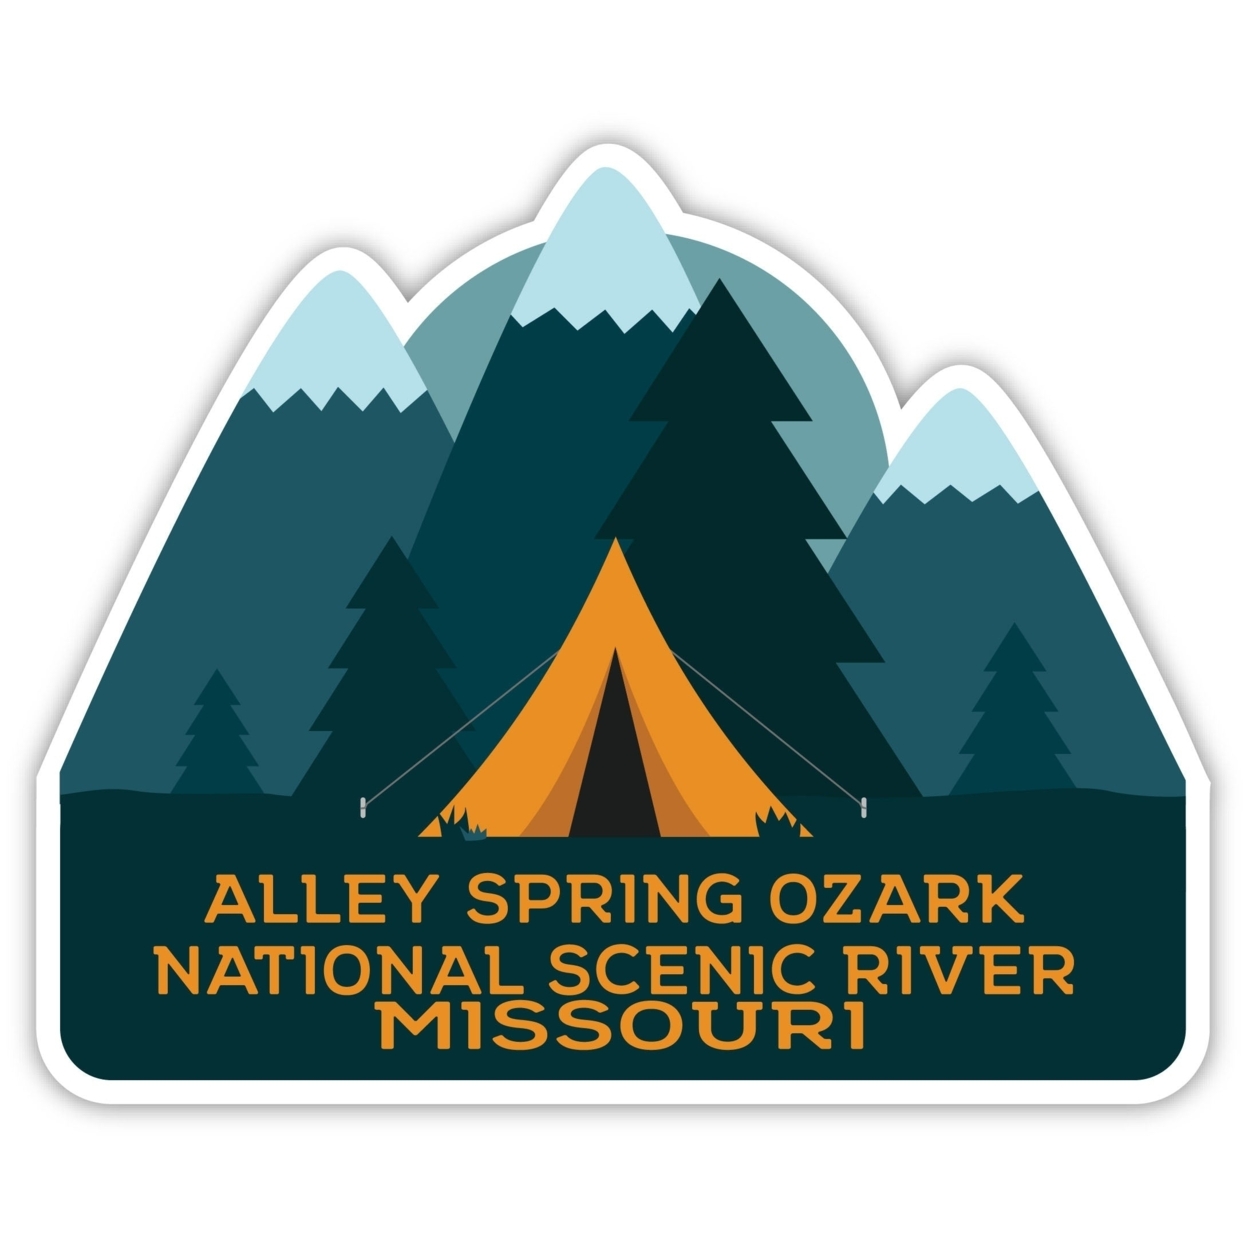 Alley Spring Ozark National Scenic River Missouri Souvenir Decorative Stickers (Choose Theme And Size) - Single Unit, 8-Inch, Tent